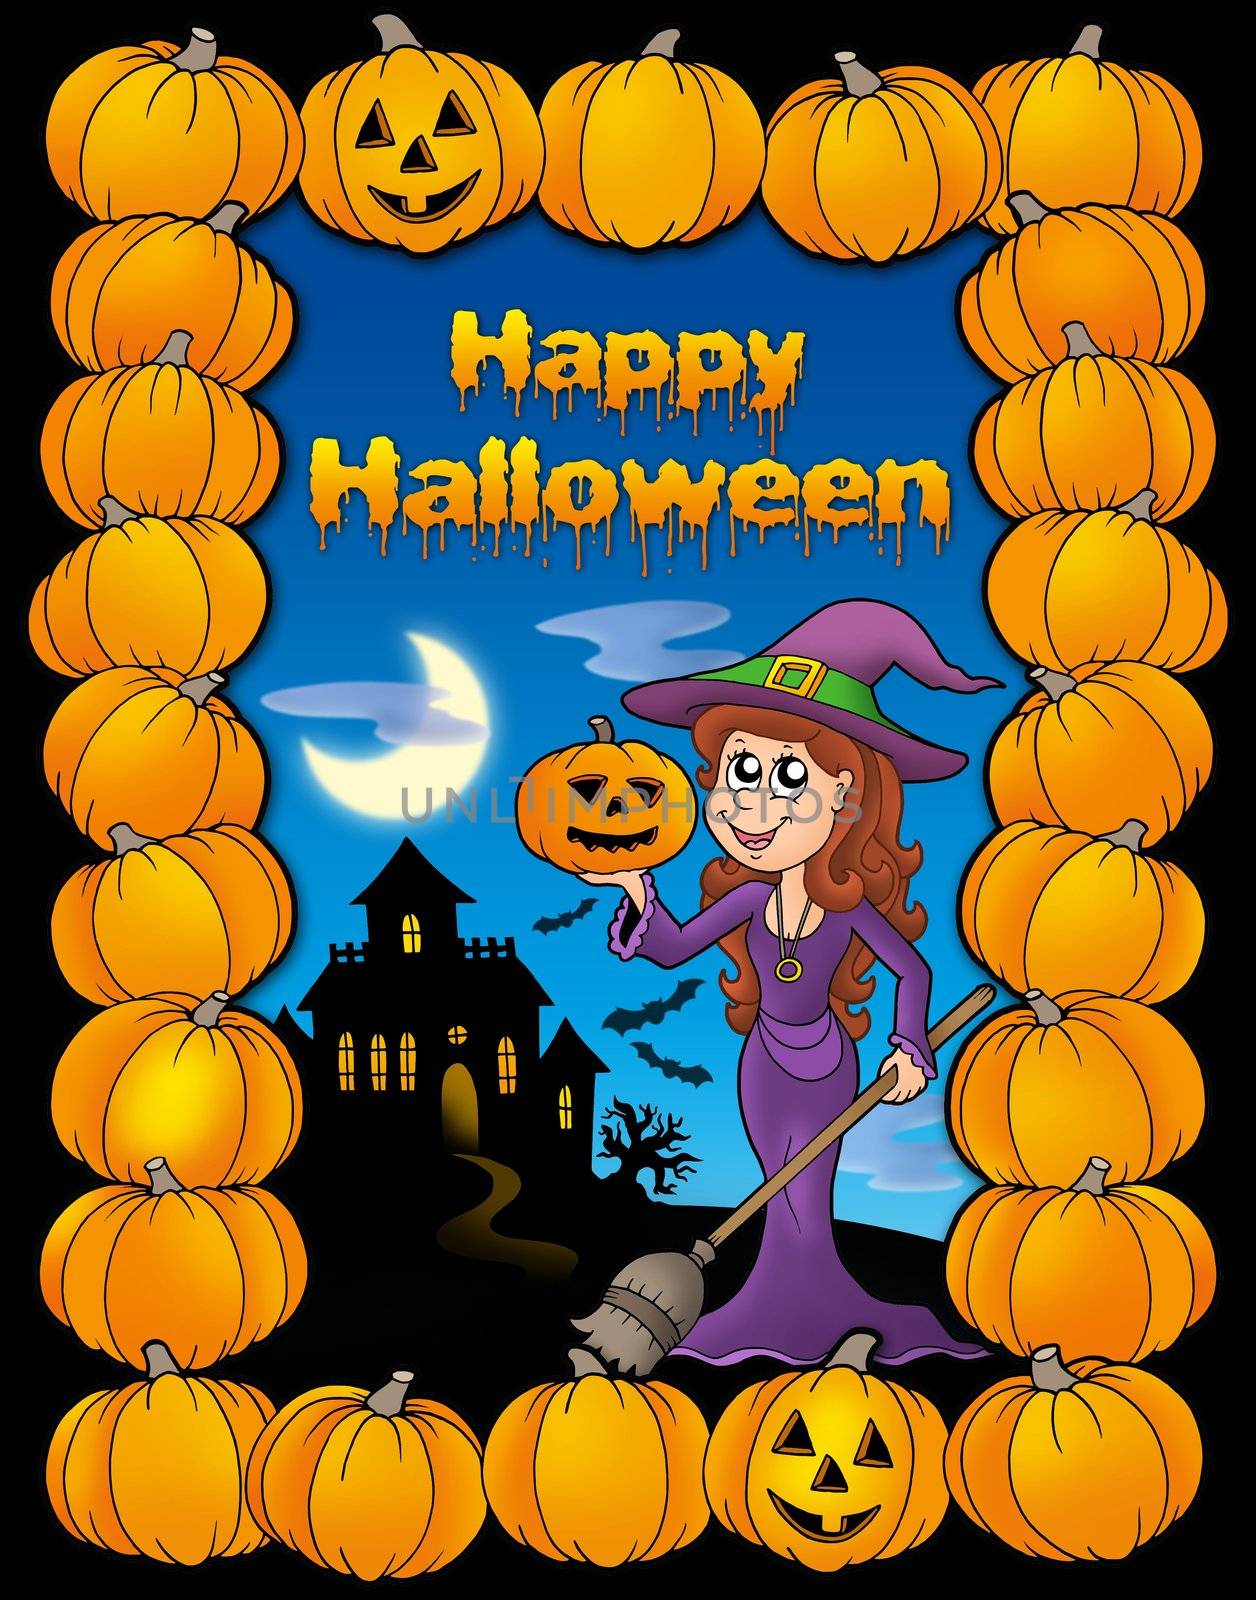 Happy Halloween card - color illustration.